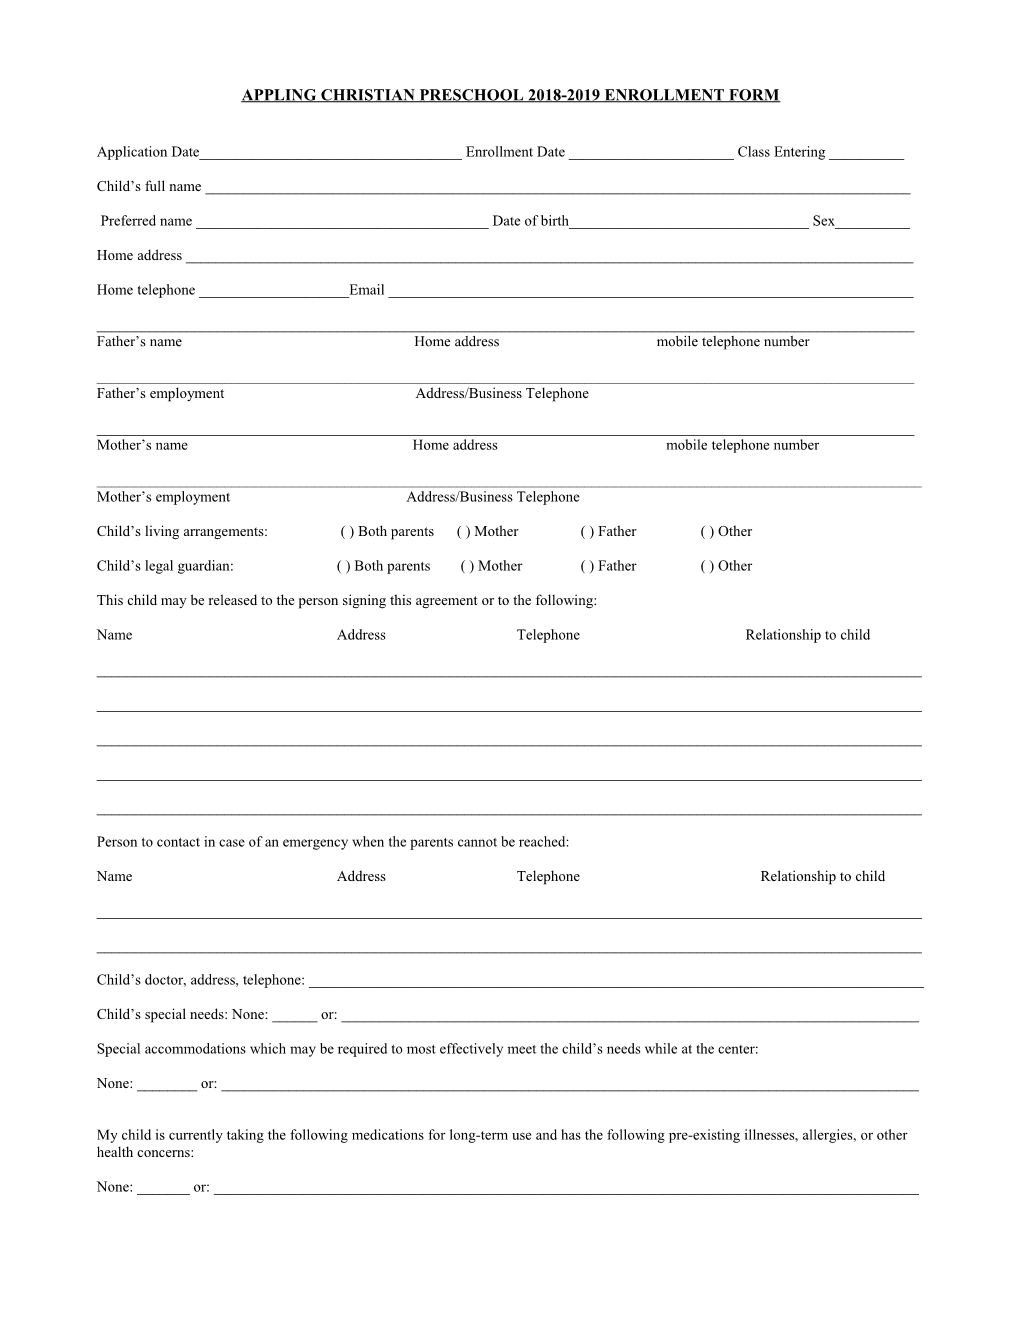 Appling Christian Preschool 2018-2019Enrollment Form